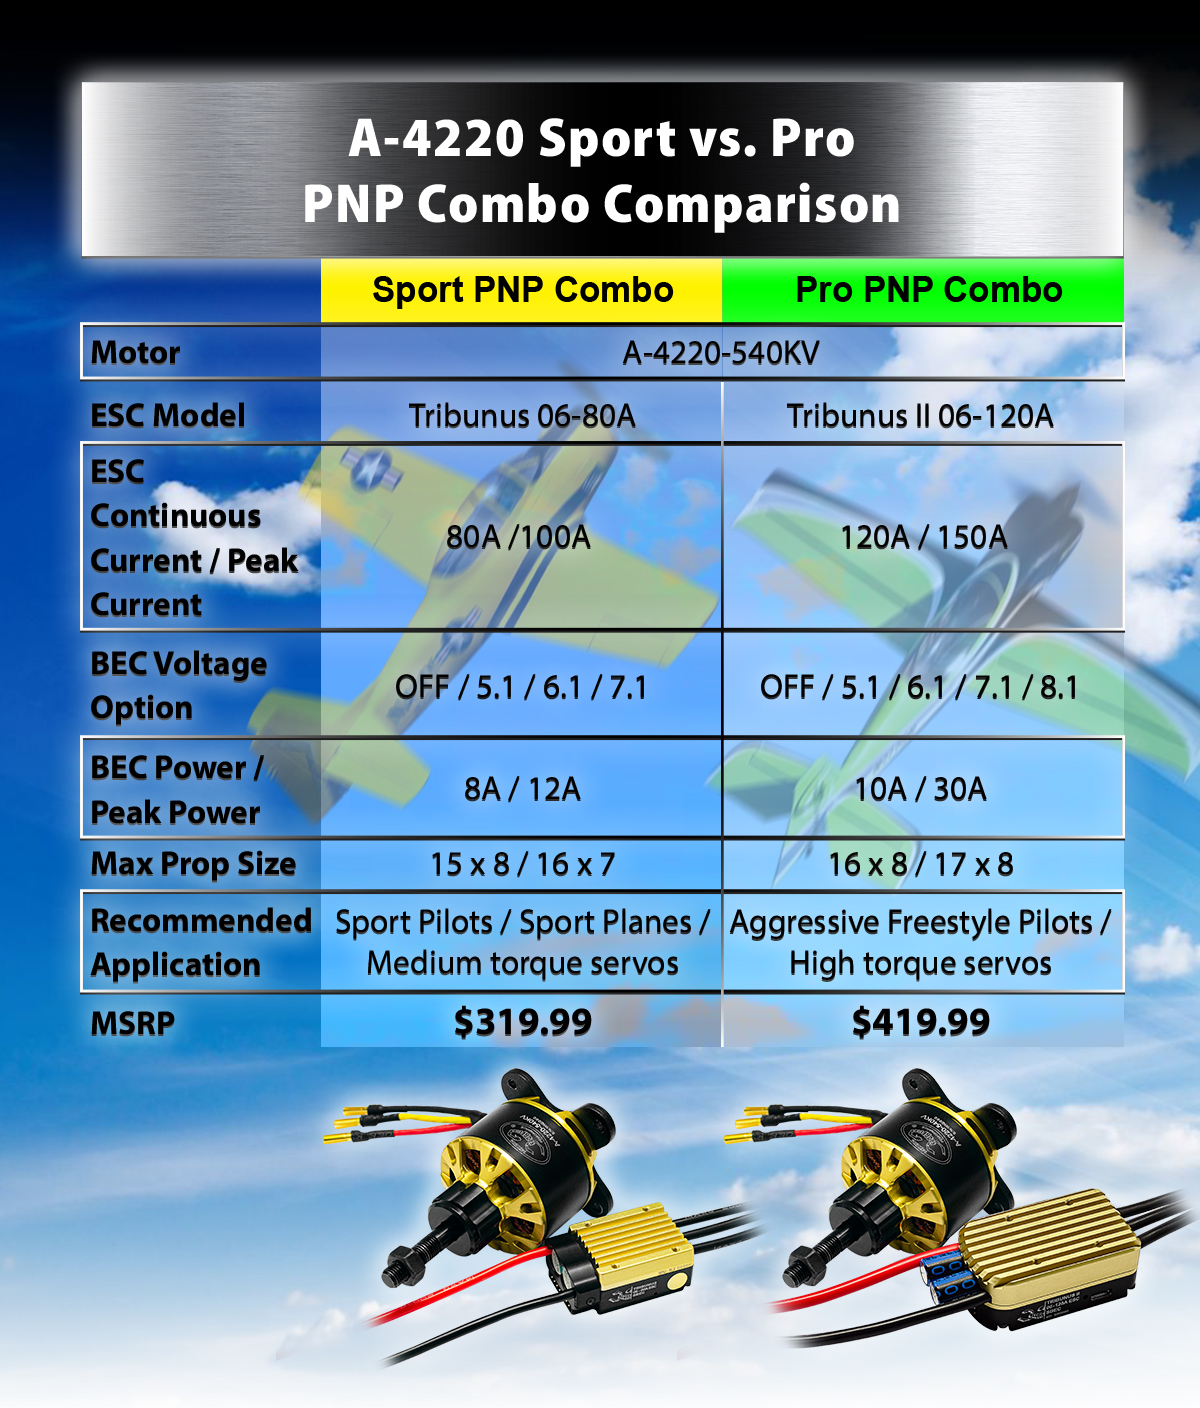 Scorpion A-4220 (Pro) PNP Combo (6s/70E+/2553w) features